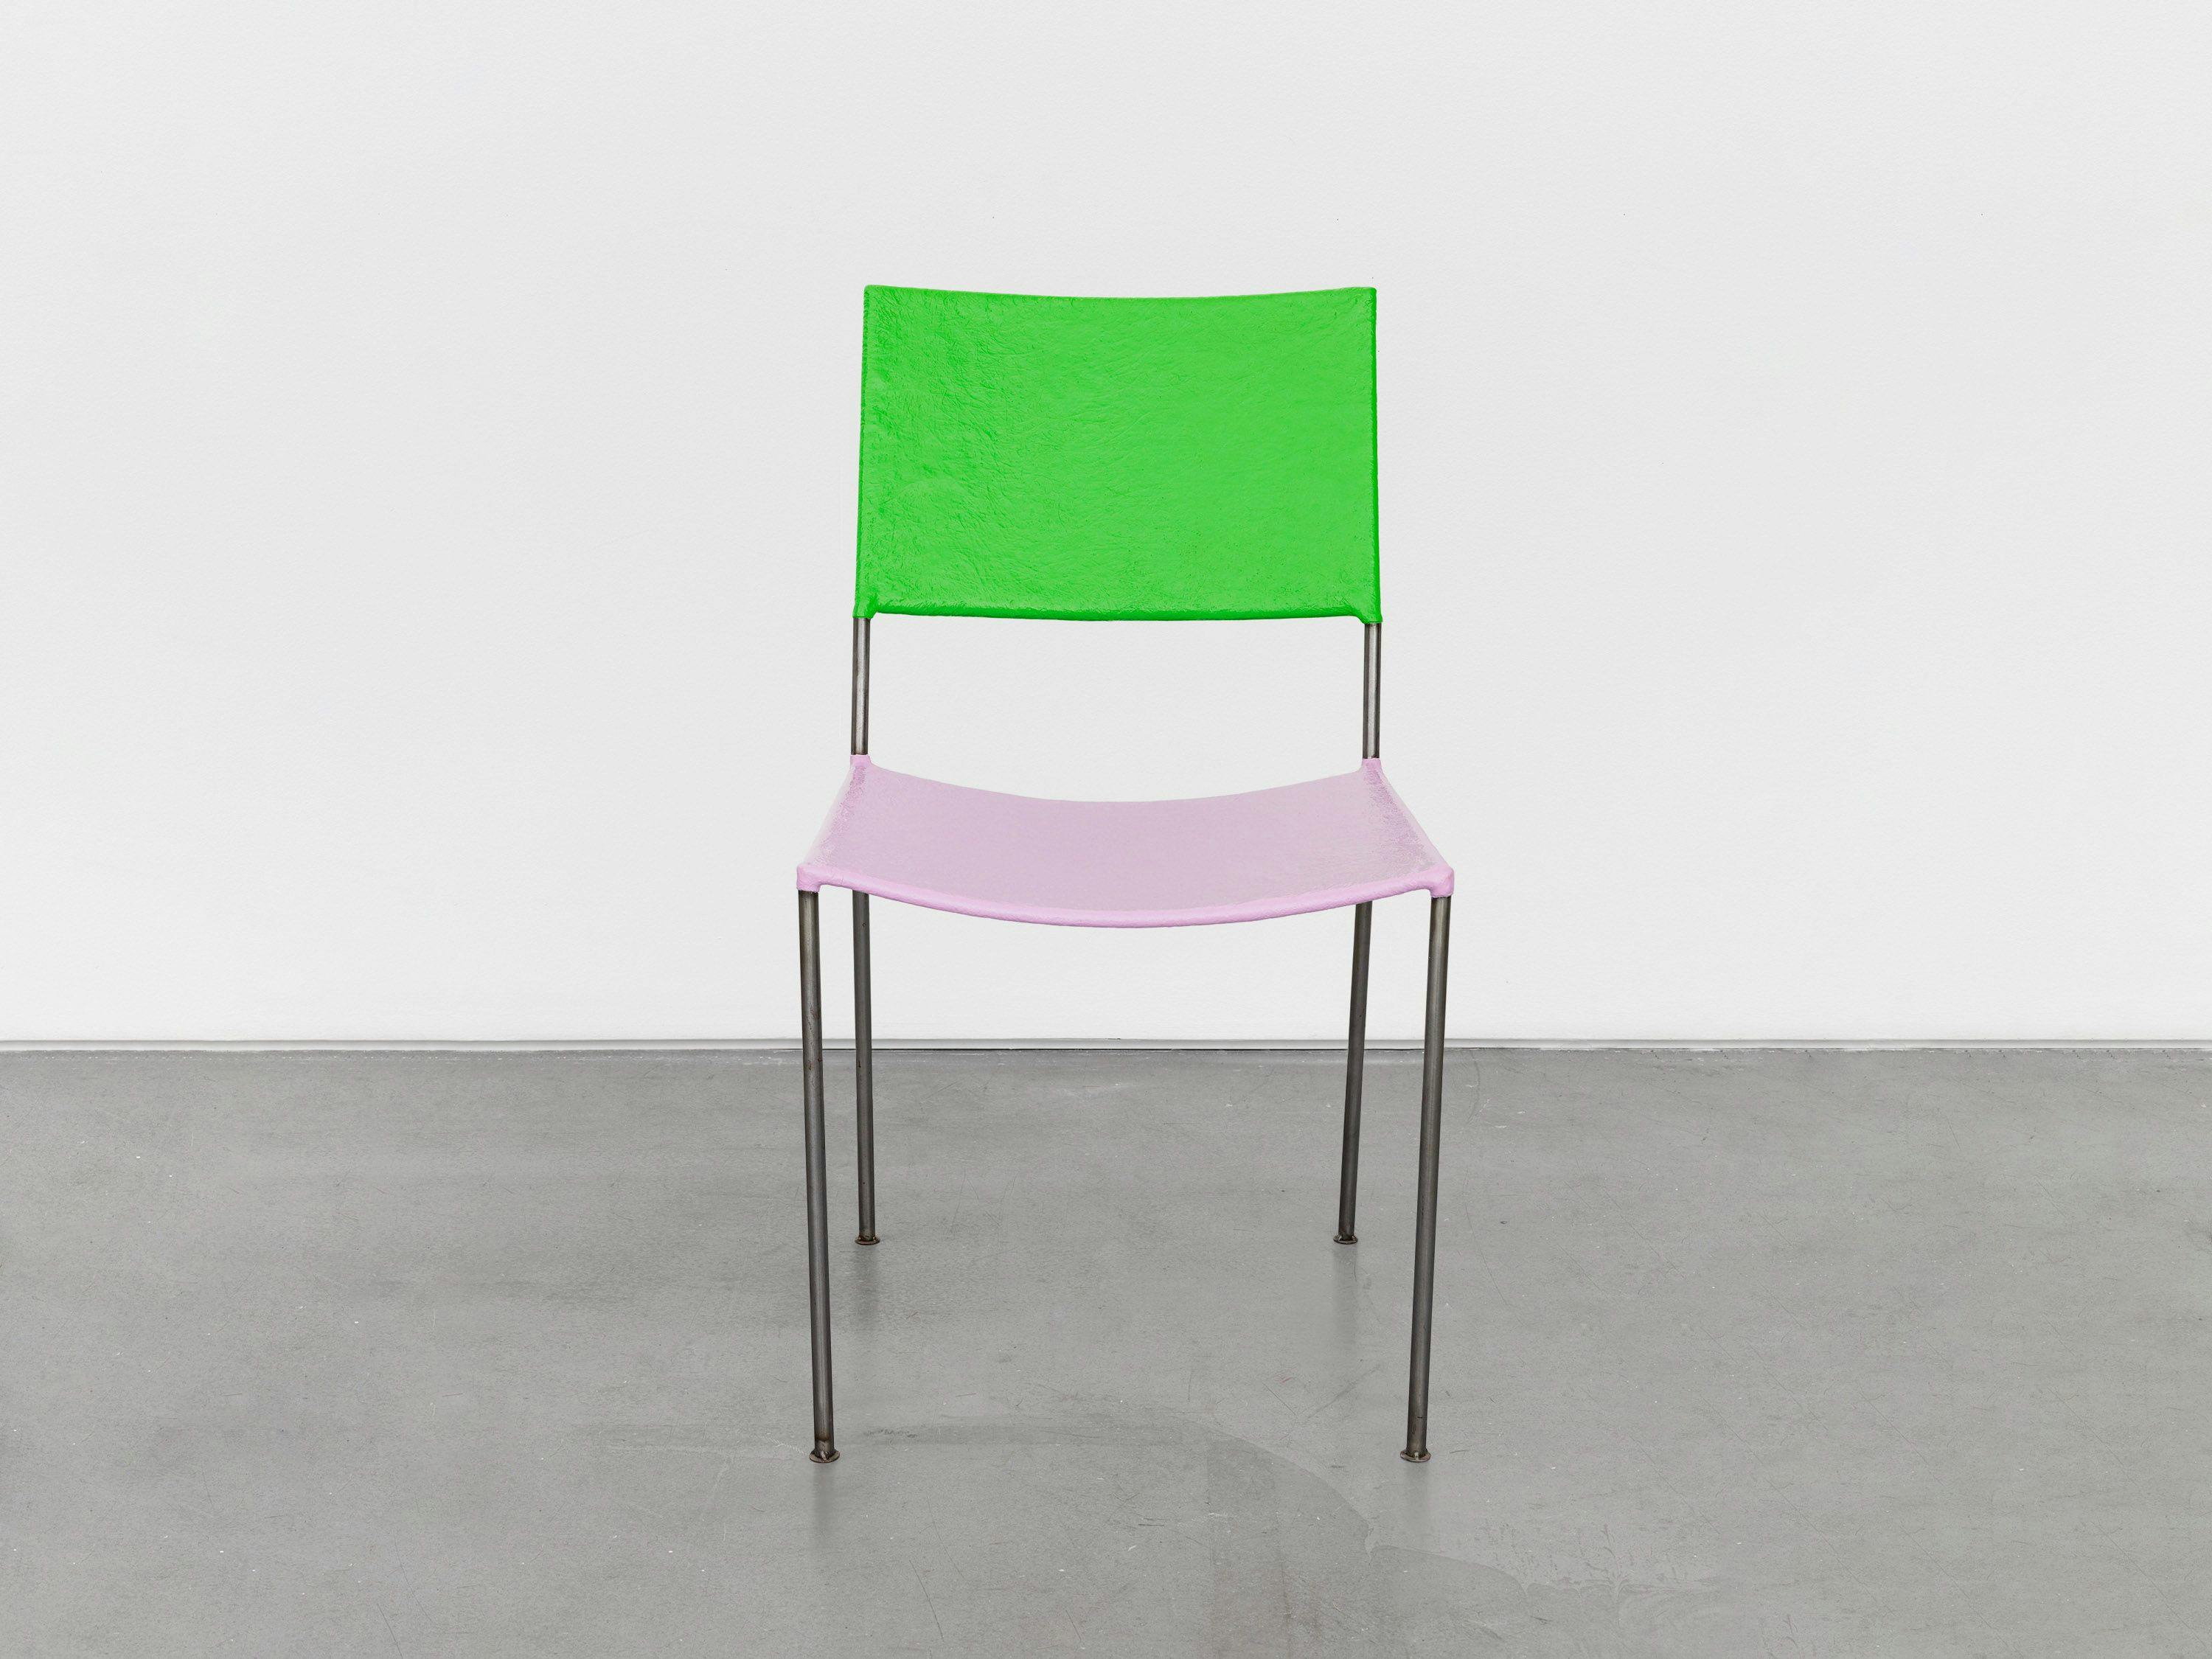 Furniture by Franz West, titled Künstlerstuhl (Artist's Chair), dated 2006.